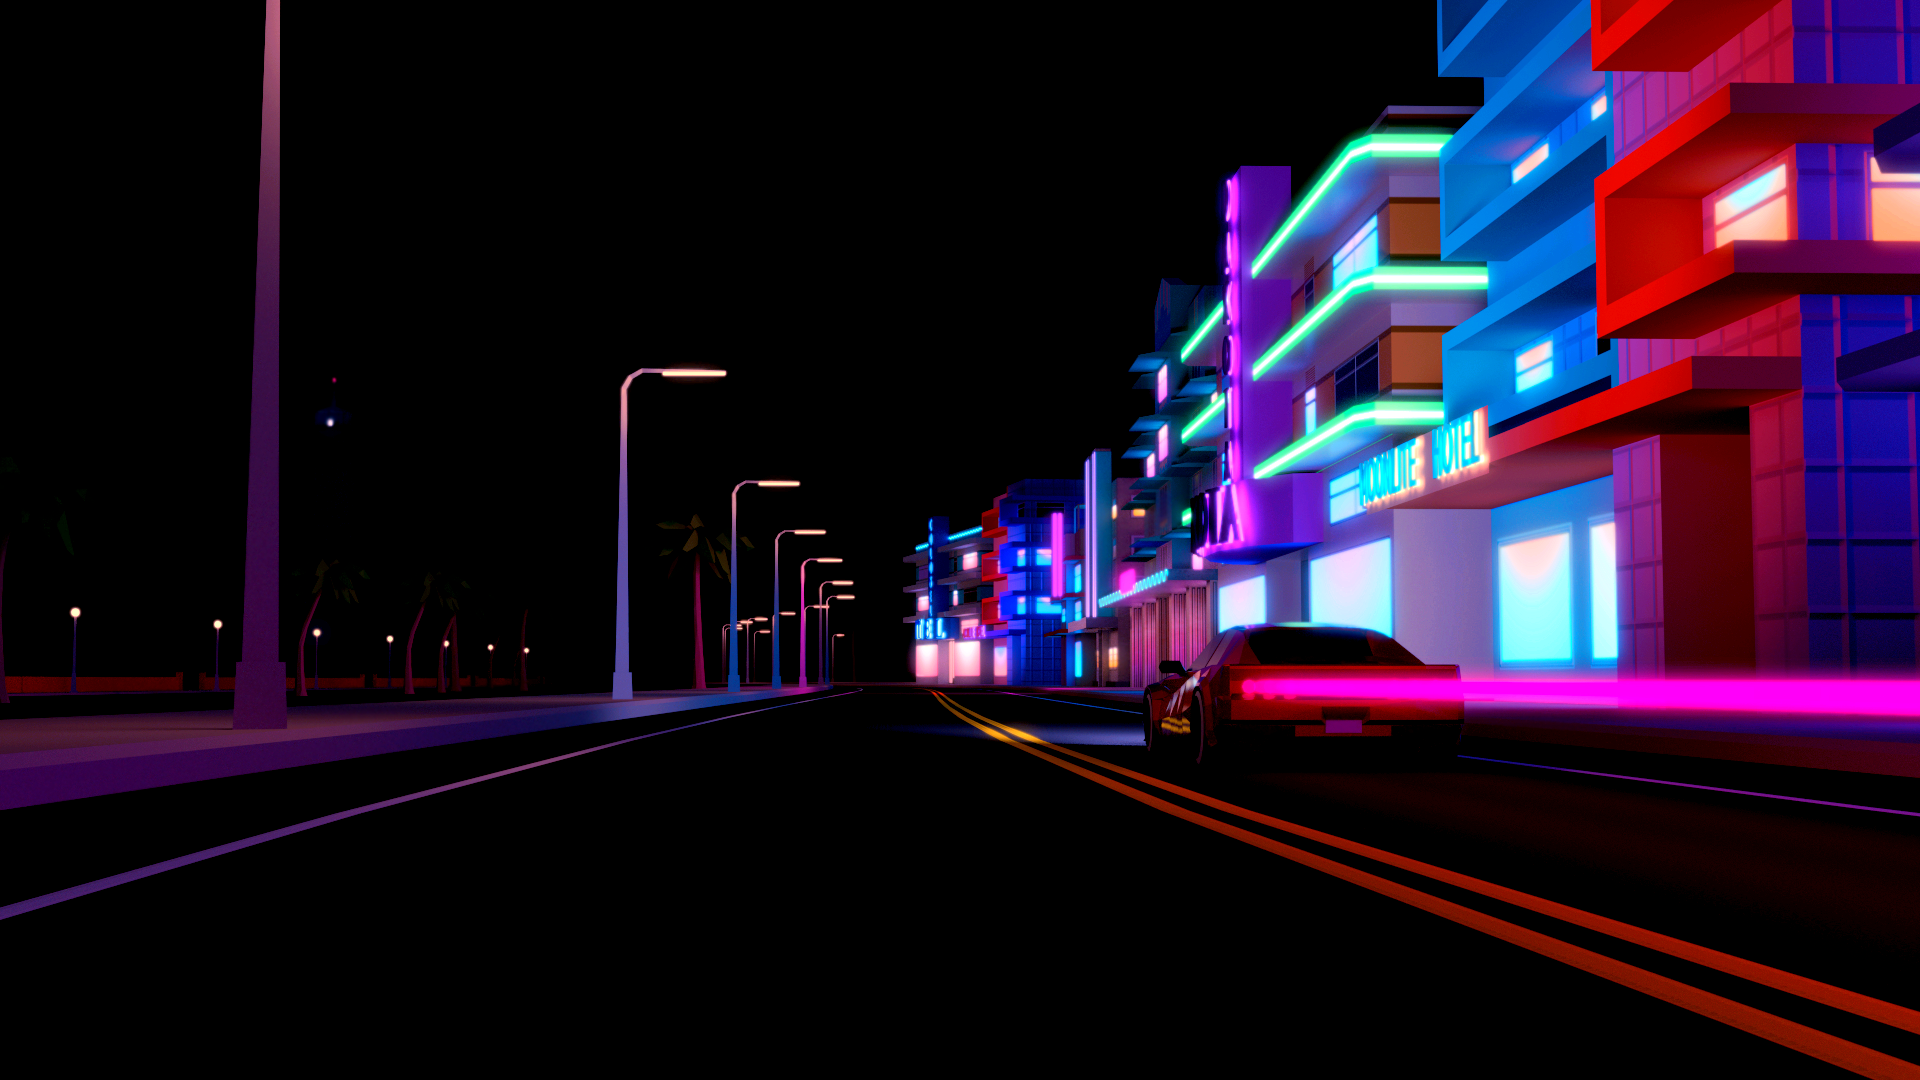 General 1920x1080 vaporwave car vehicle neon digital art artwork city night street